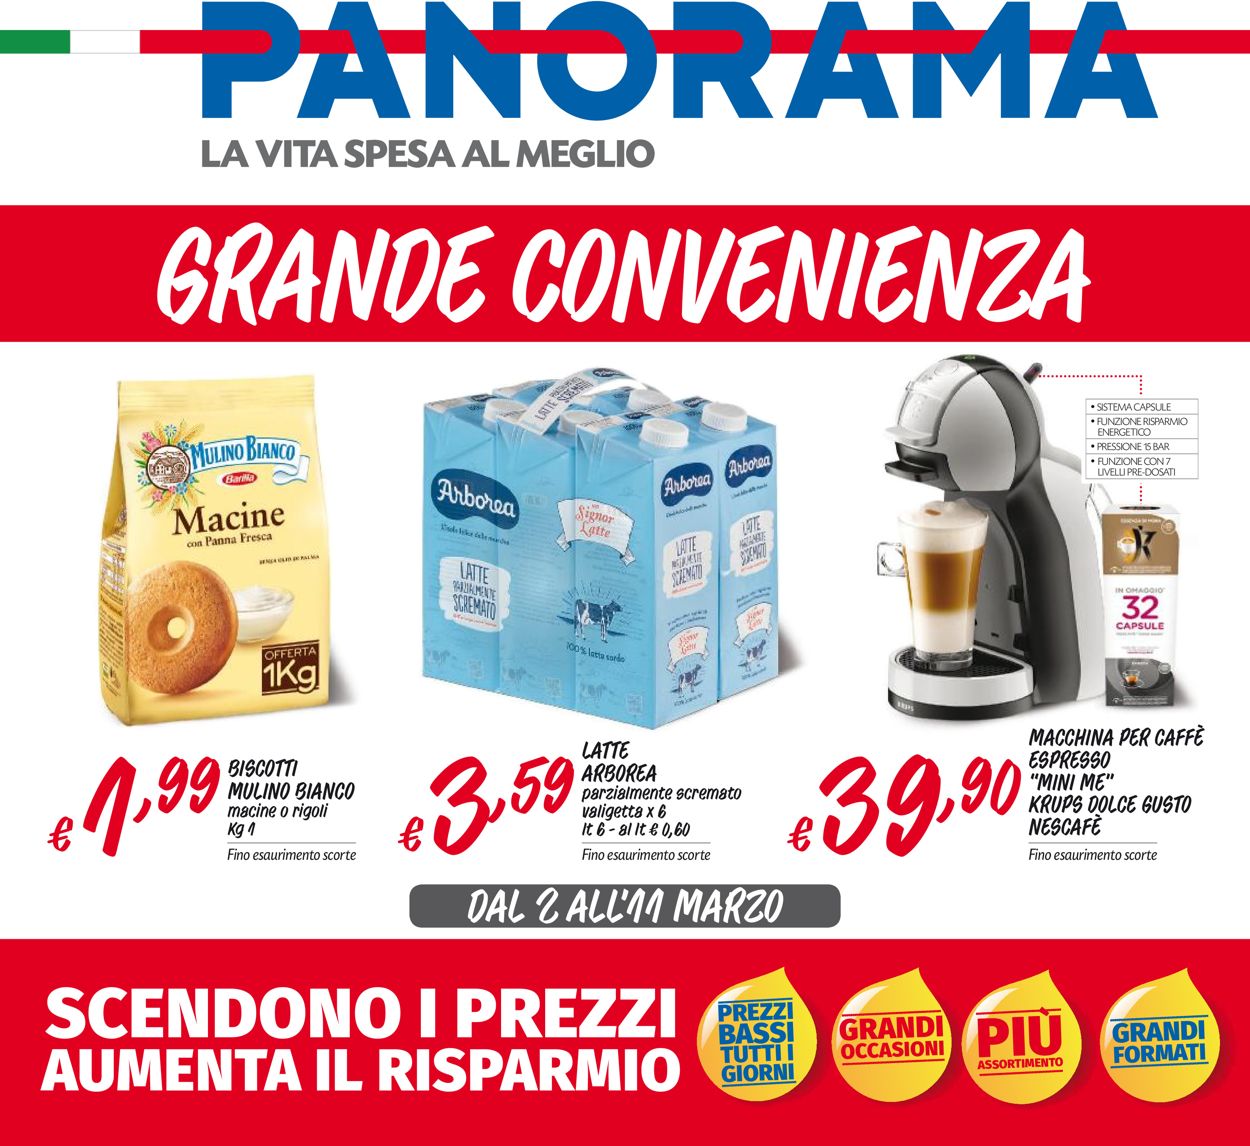 Volantino Pam Panorama - Offerte 02/03-11/03/2020